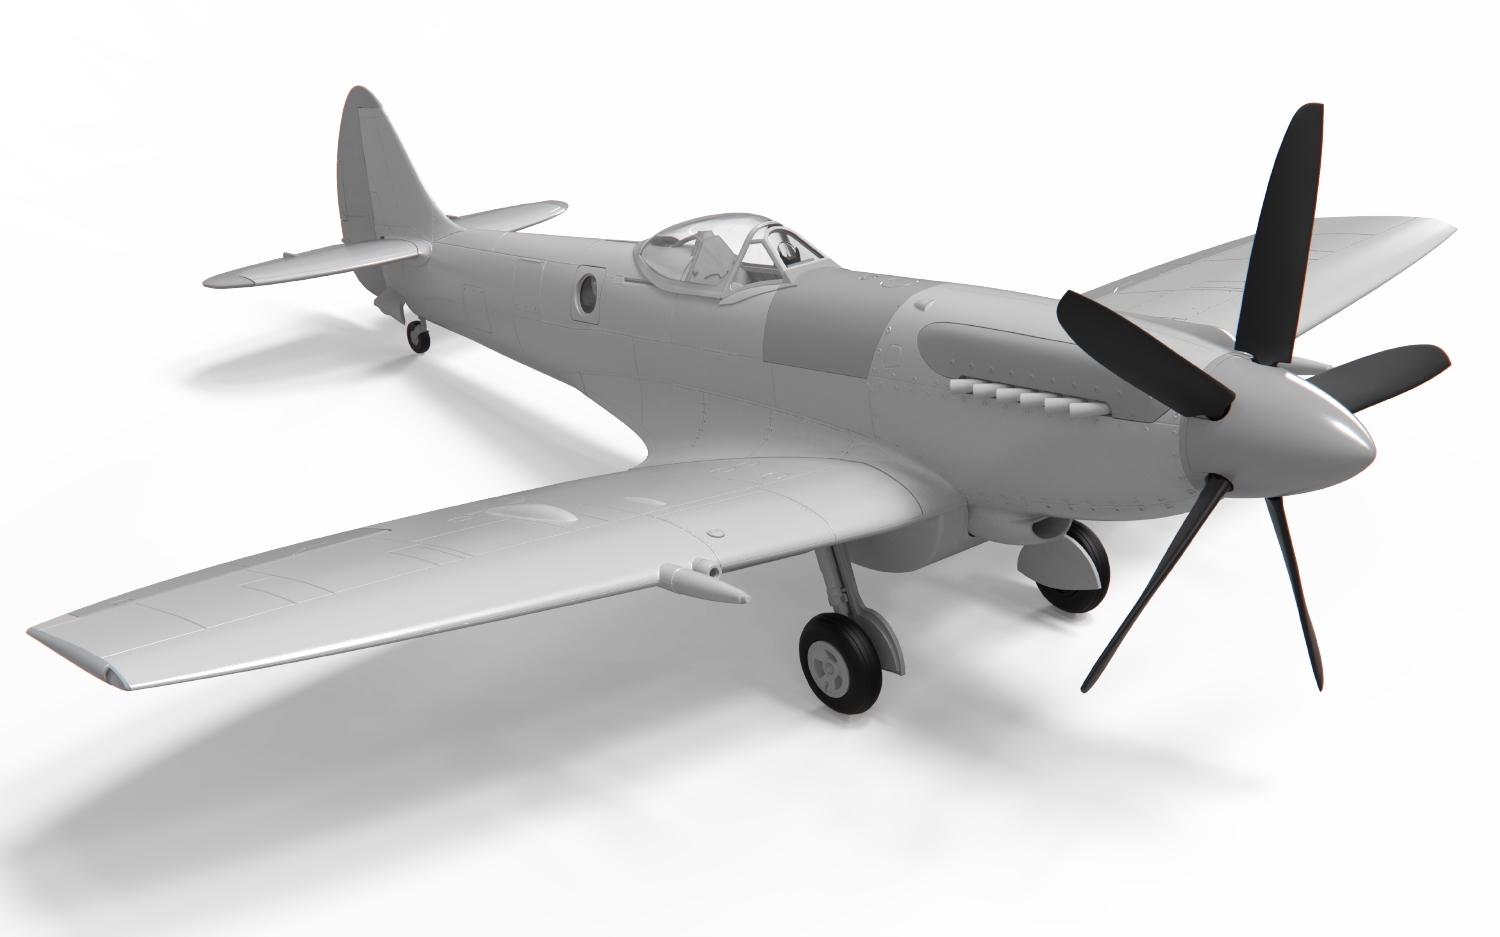 Yinrunx Supermarine Spitfire FR MK XIV 1:48 Military Aviation Plastic Model Kit Aircraft Educational Toys